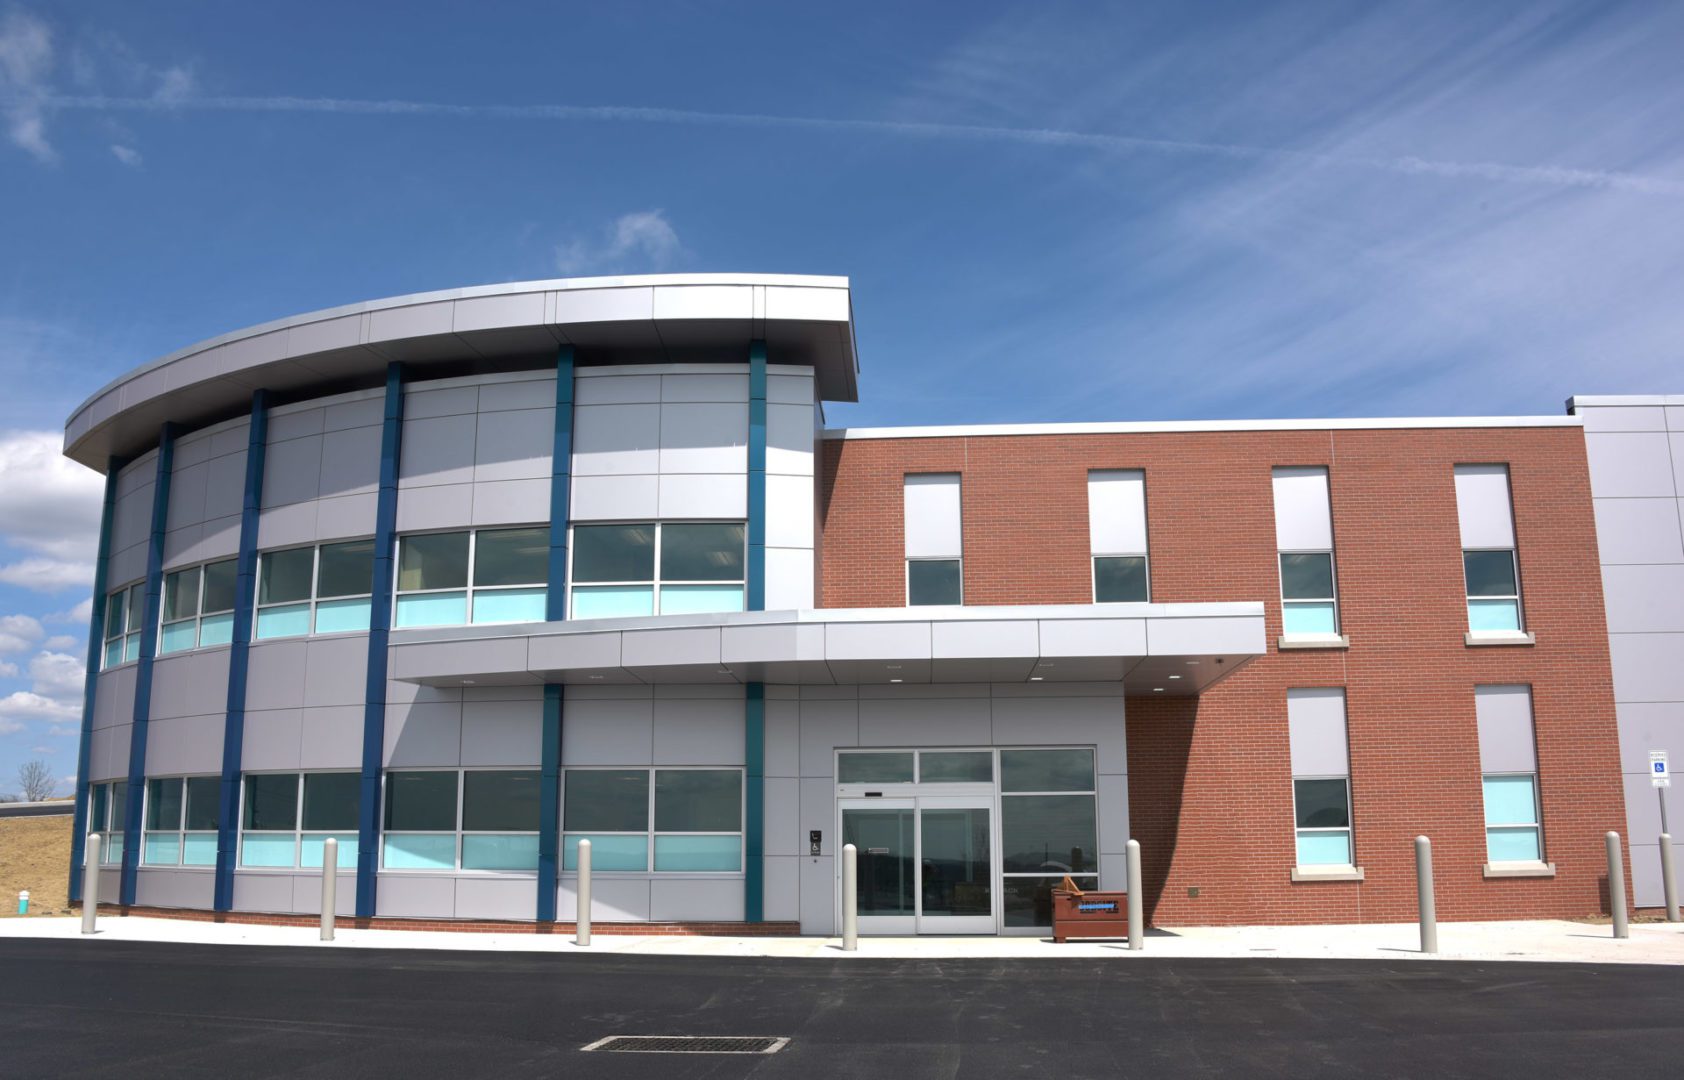 Penn Highlands’ Clarion medical building slated to open in September